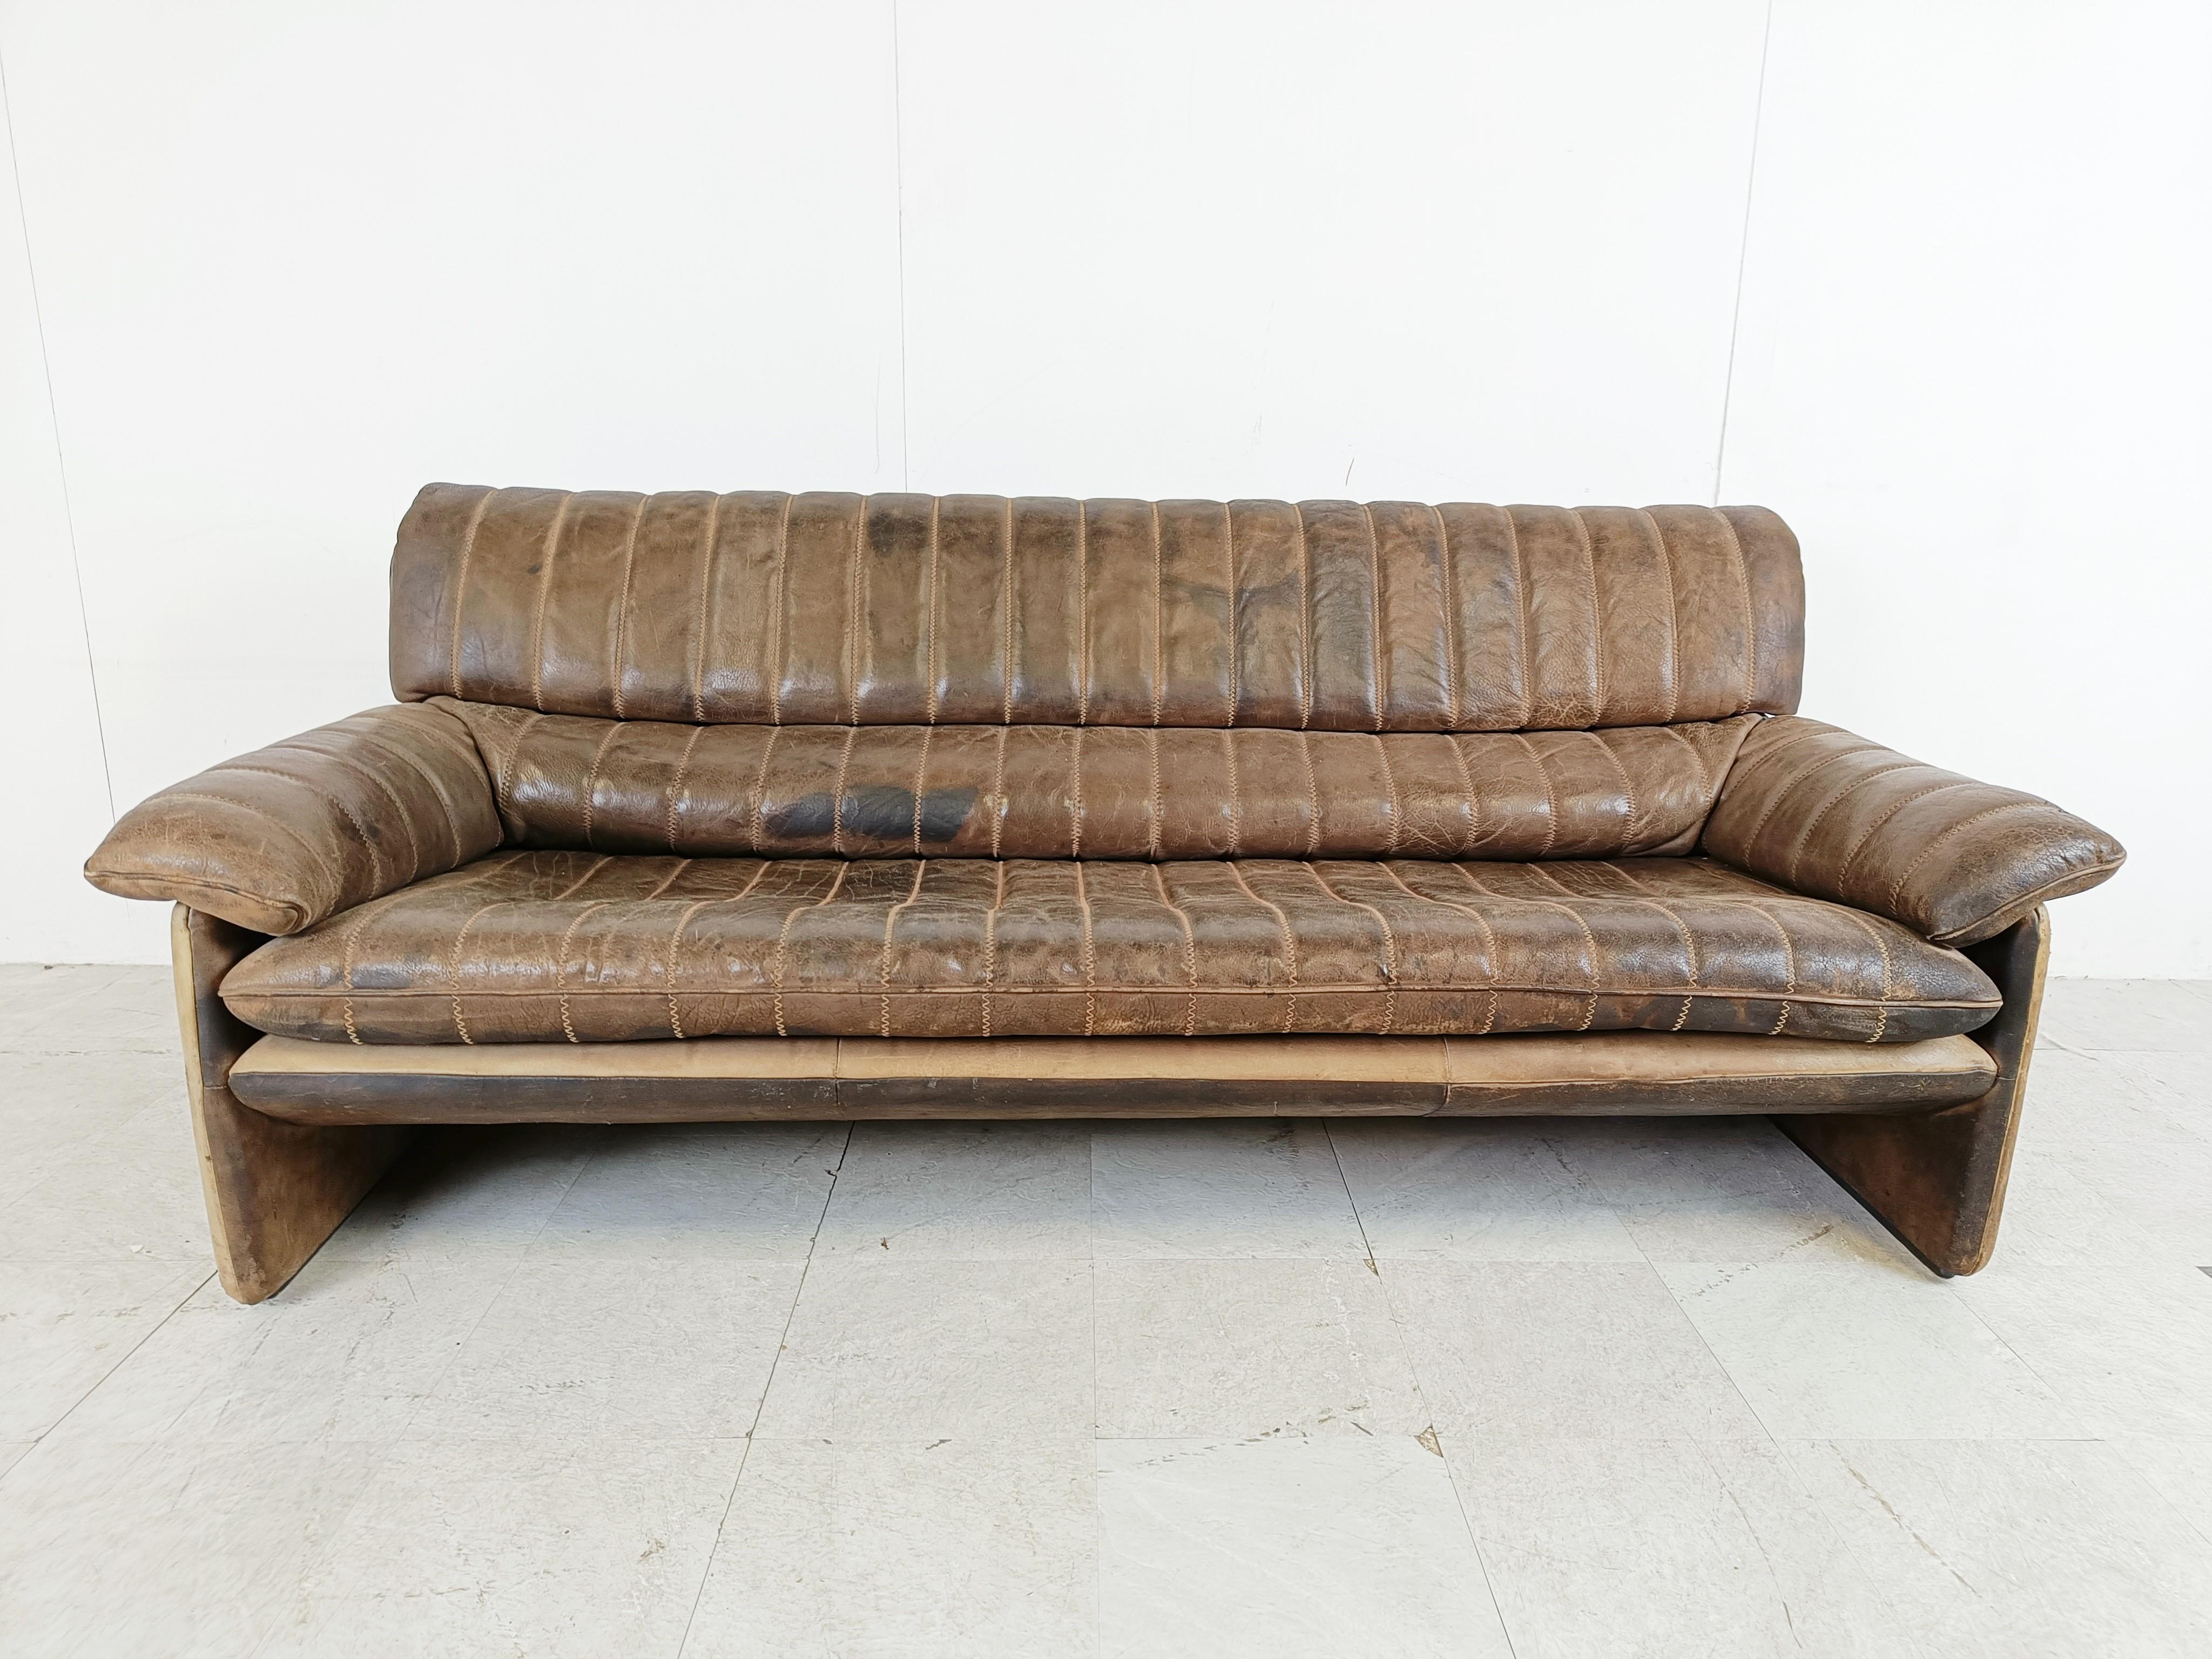 De Sede Ds86 Sofa aus braunem Leder, 1970er Jahre (Moderne der Mitte des Jahrhunderts) im Angebot